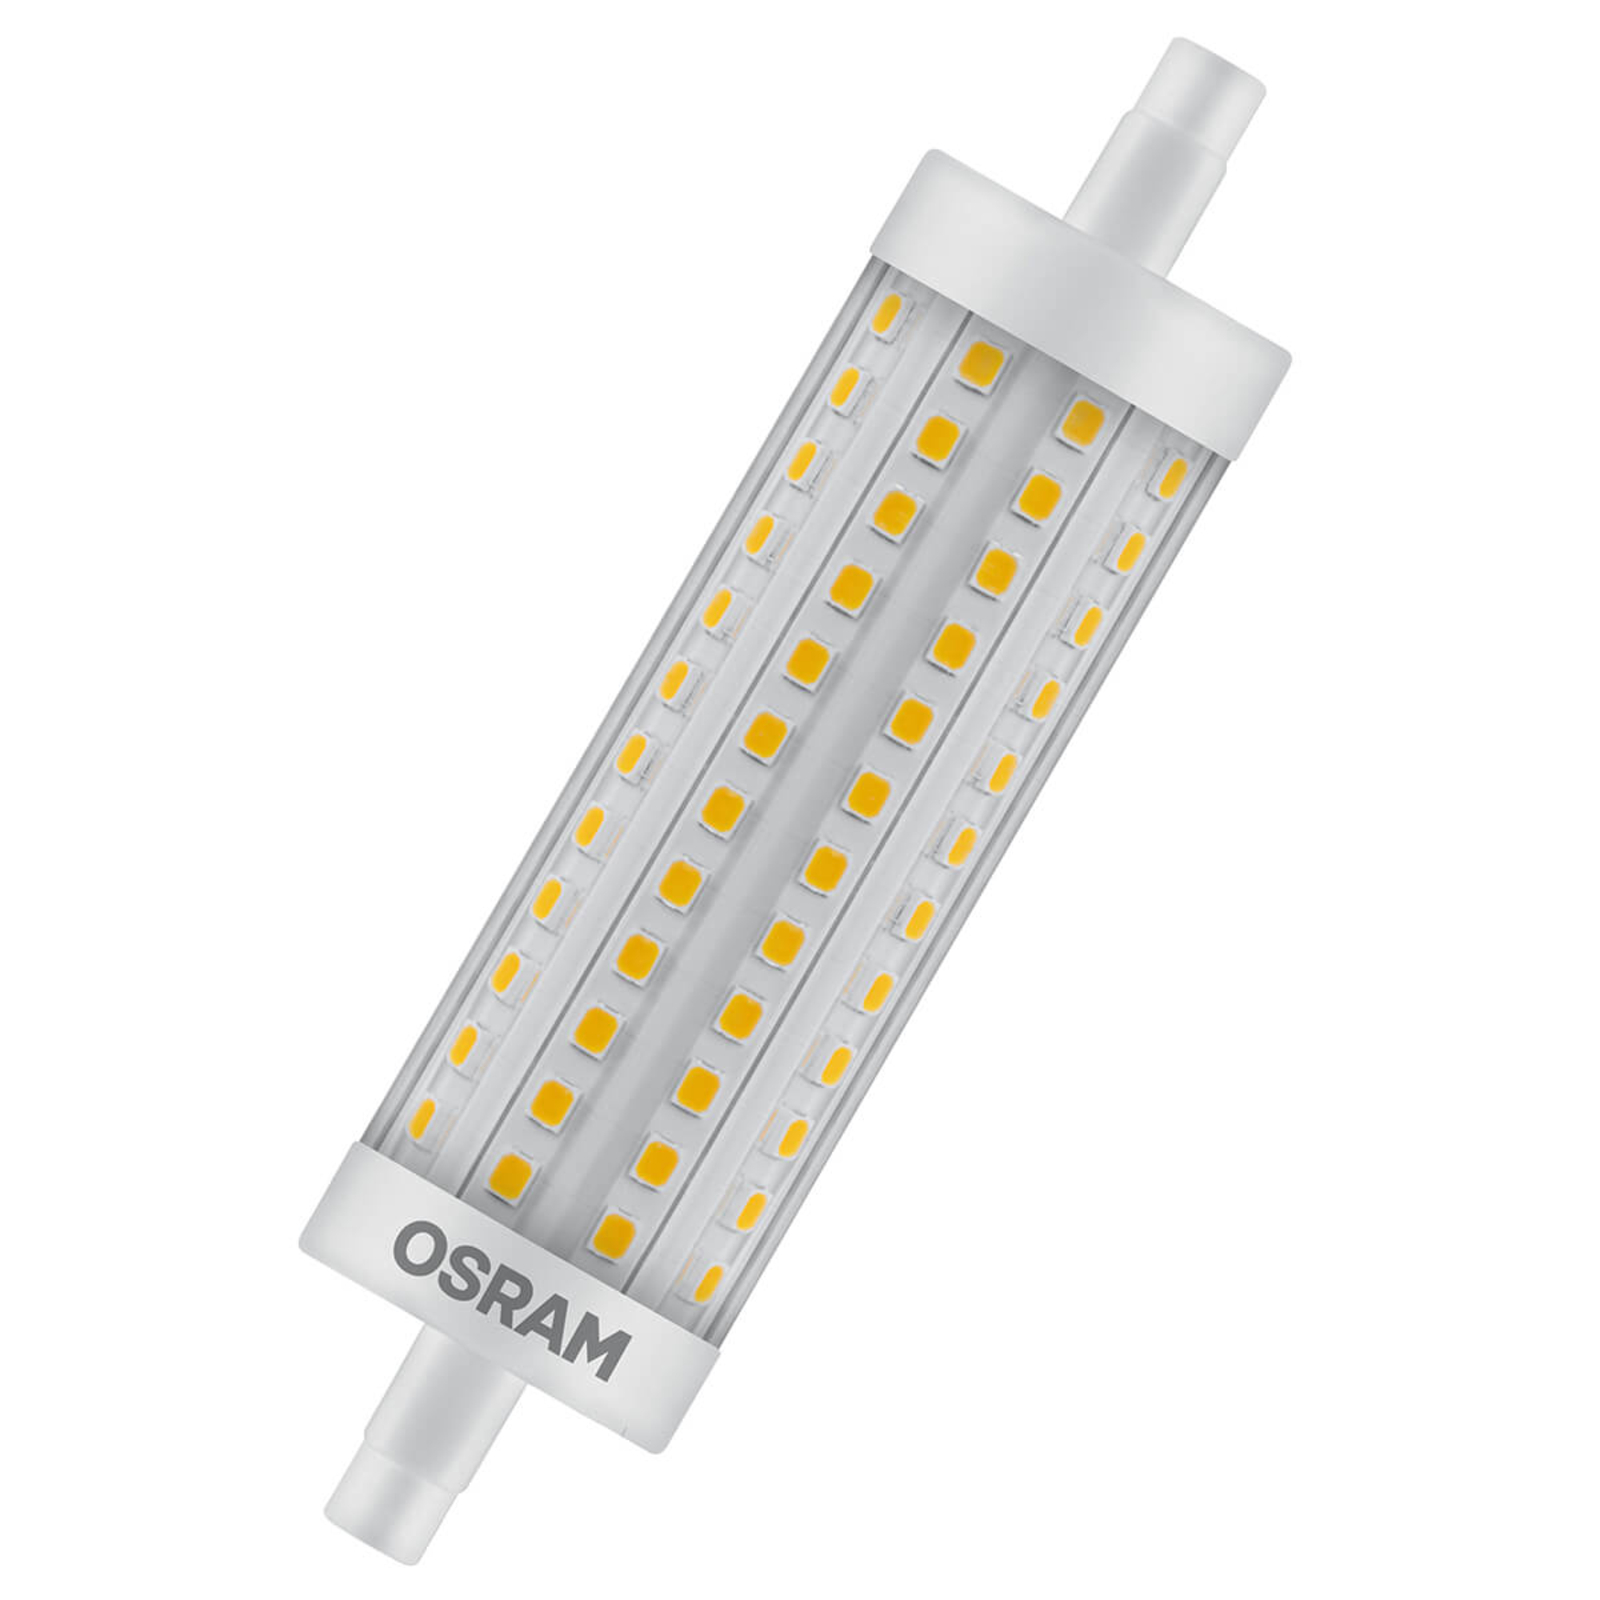 OSRAM tube LED bulb R7s 16 W 11.8 cm 827 dimmable